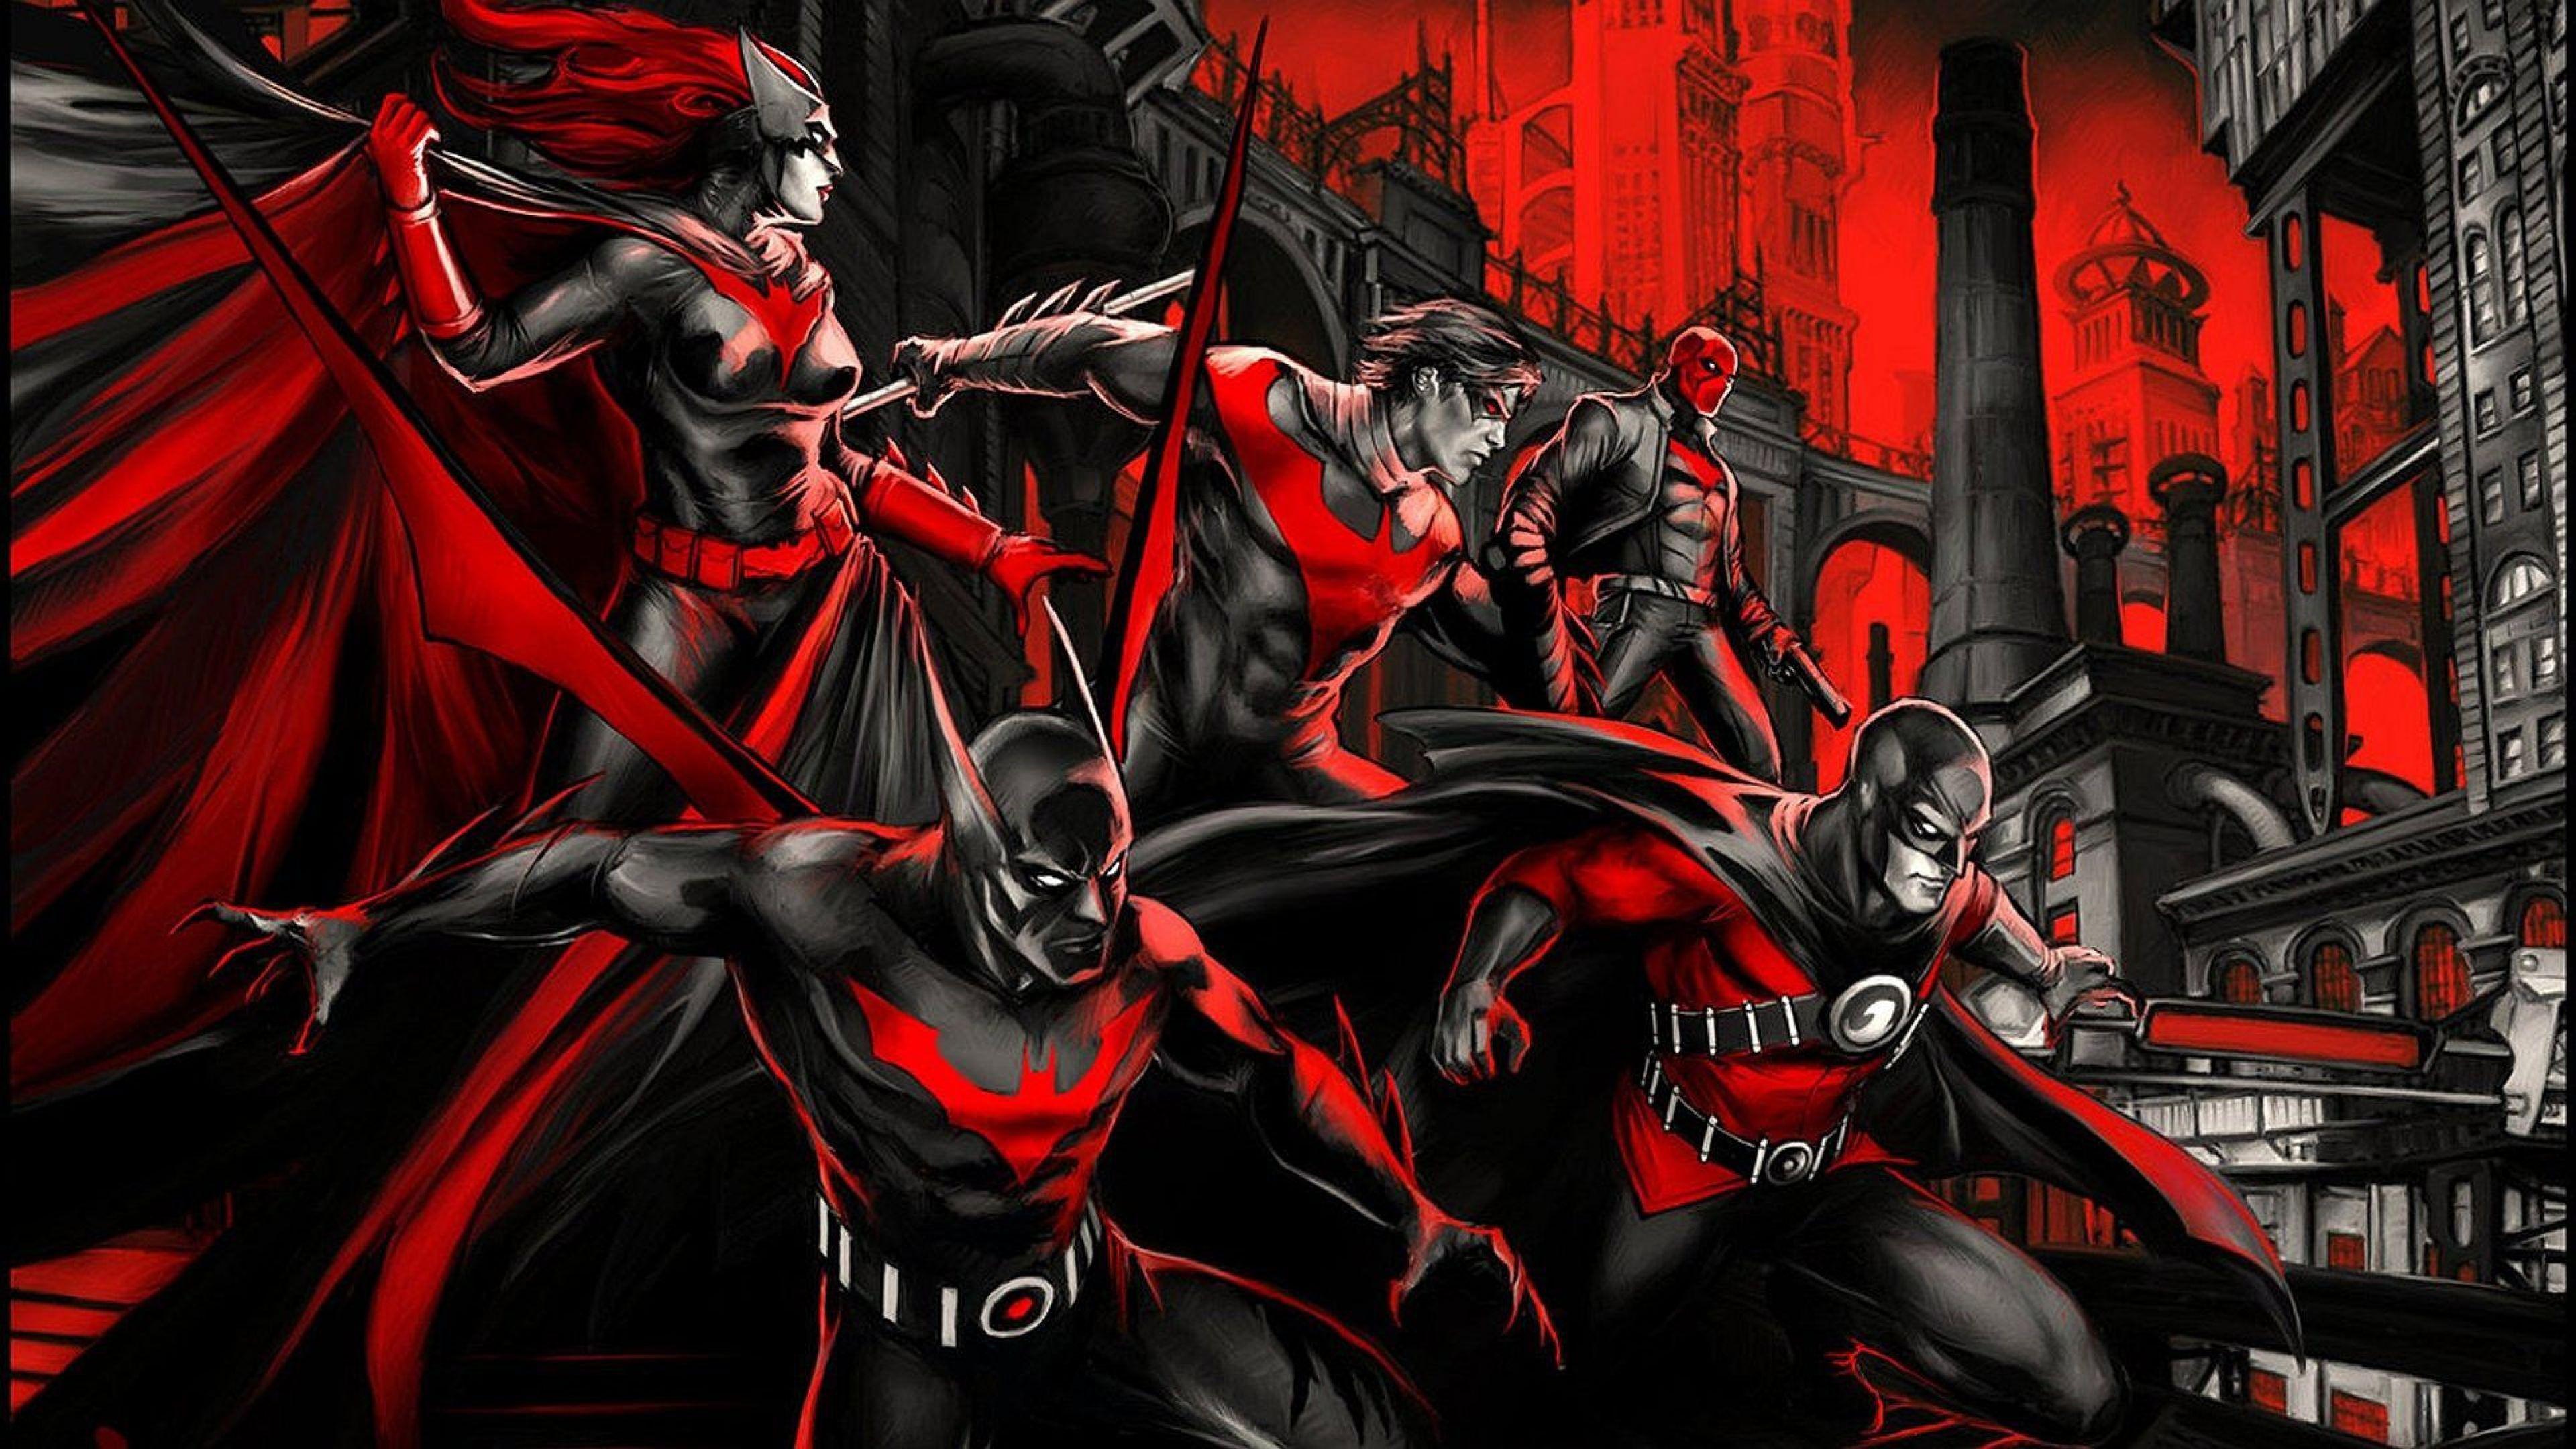 Gotham In Red superheroes wallpaper, robin wallpaper, red hood